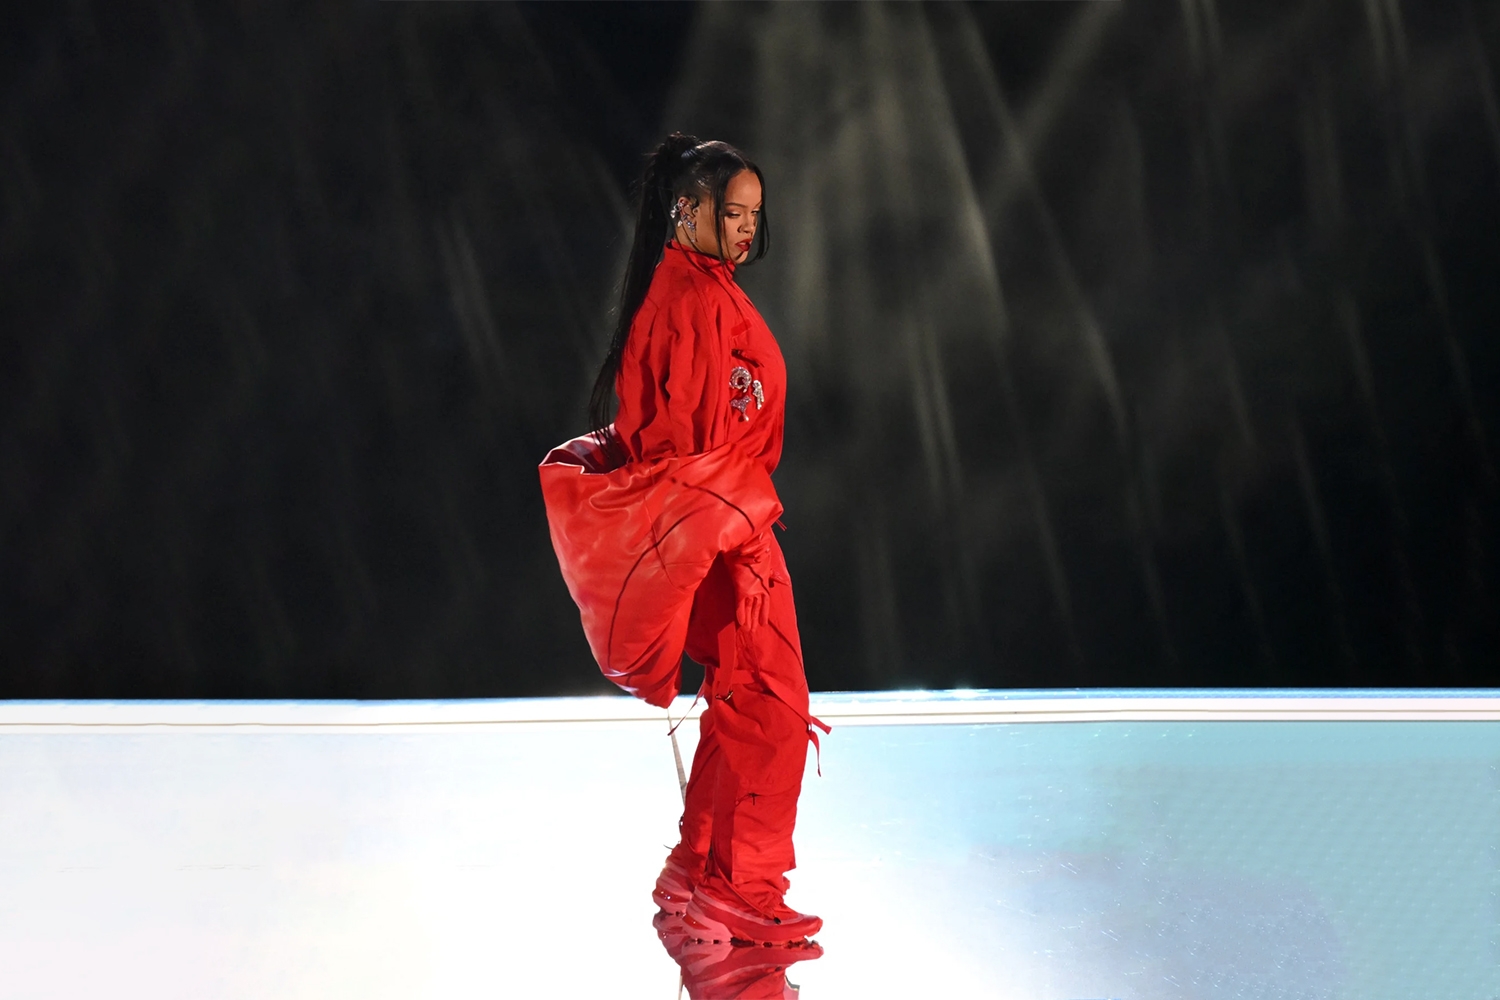 Rihanna wears Maison Margiela MM6 x Salomon Cross Low during Super Bowl performance